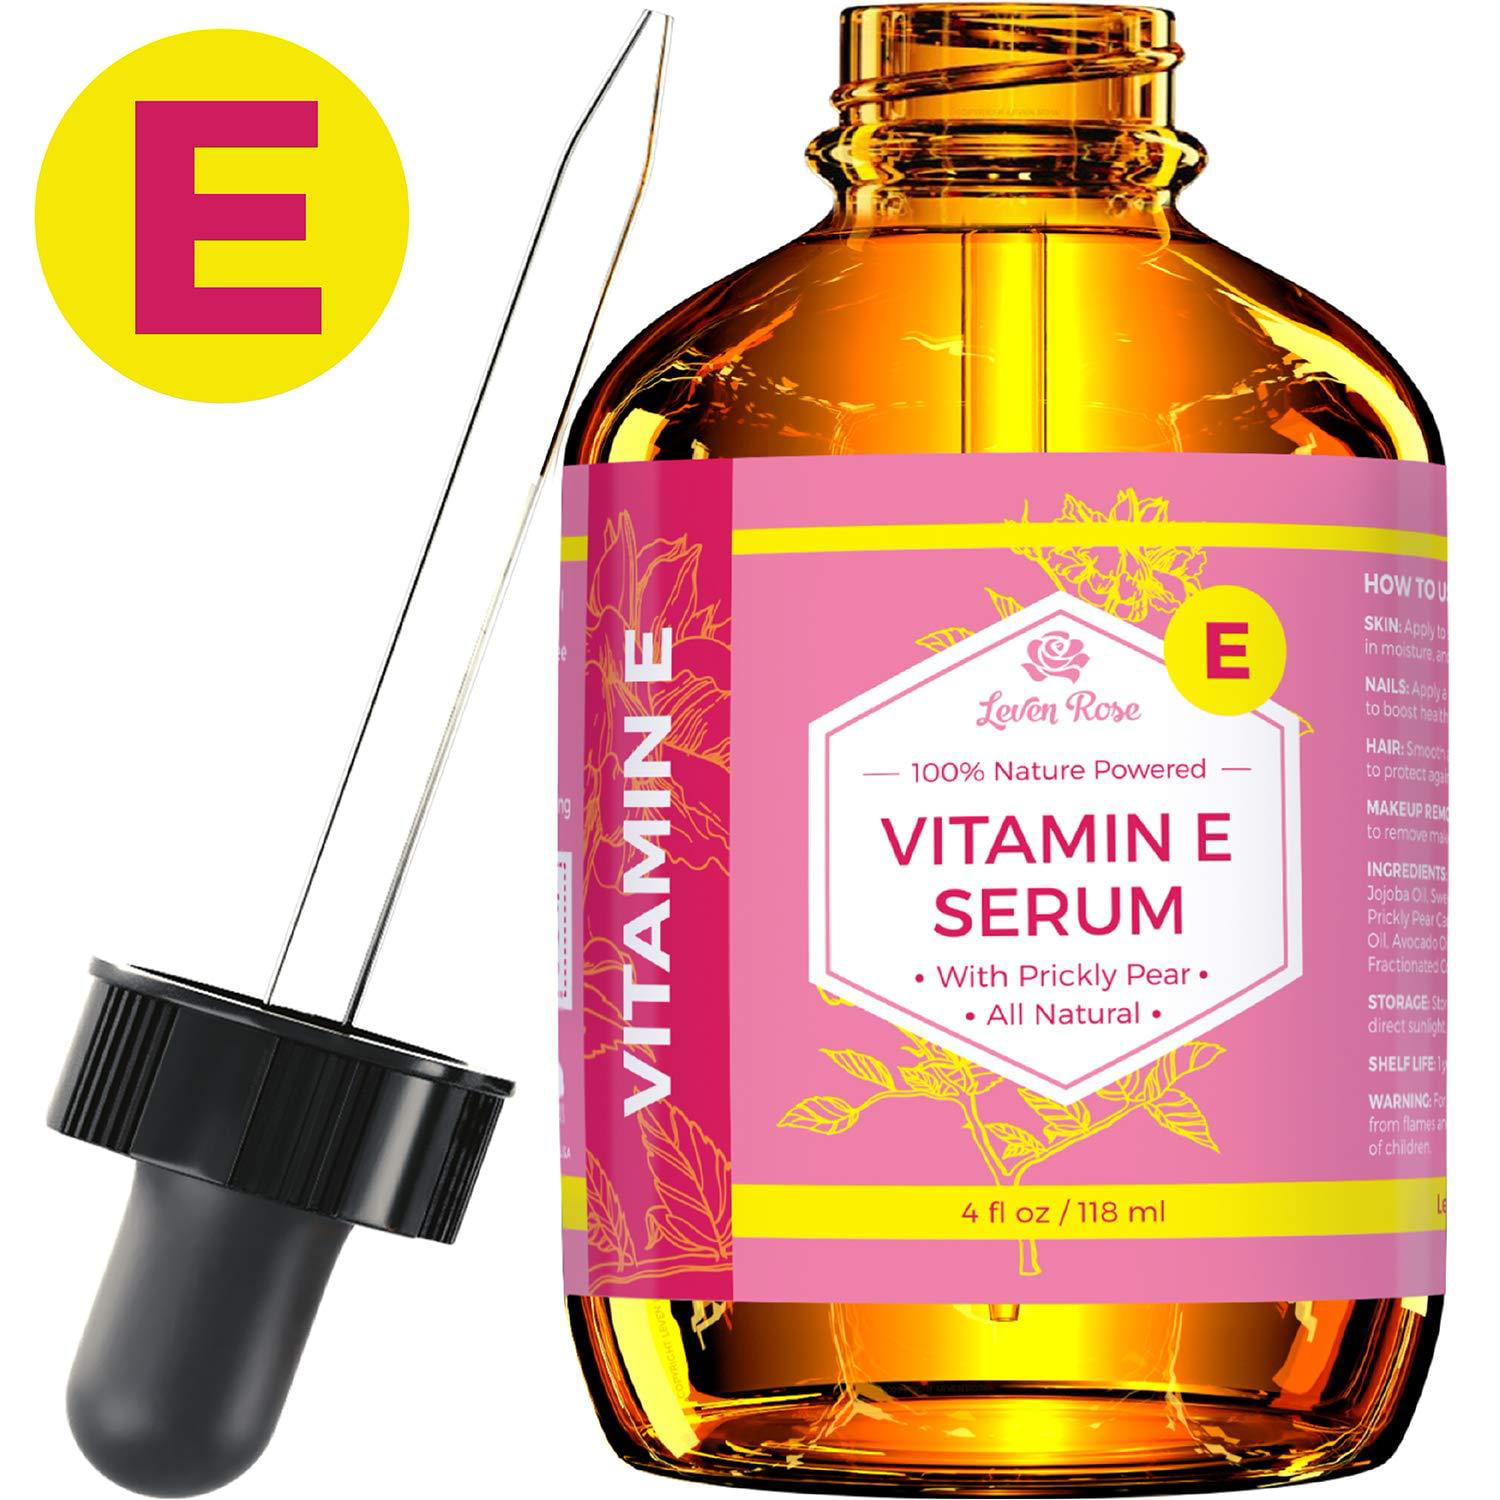 Vitamin E Serum by Leven Rose 100%  firm Organic All  